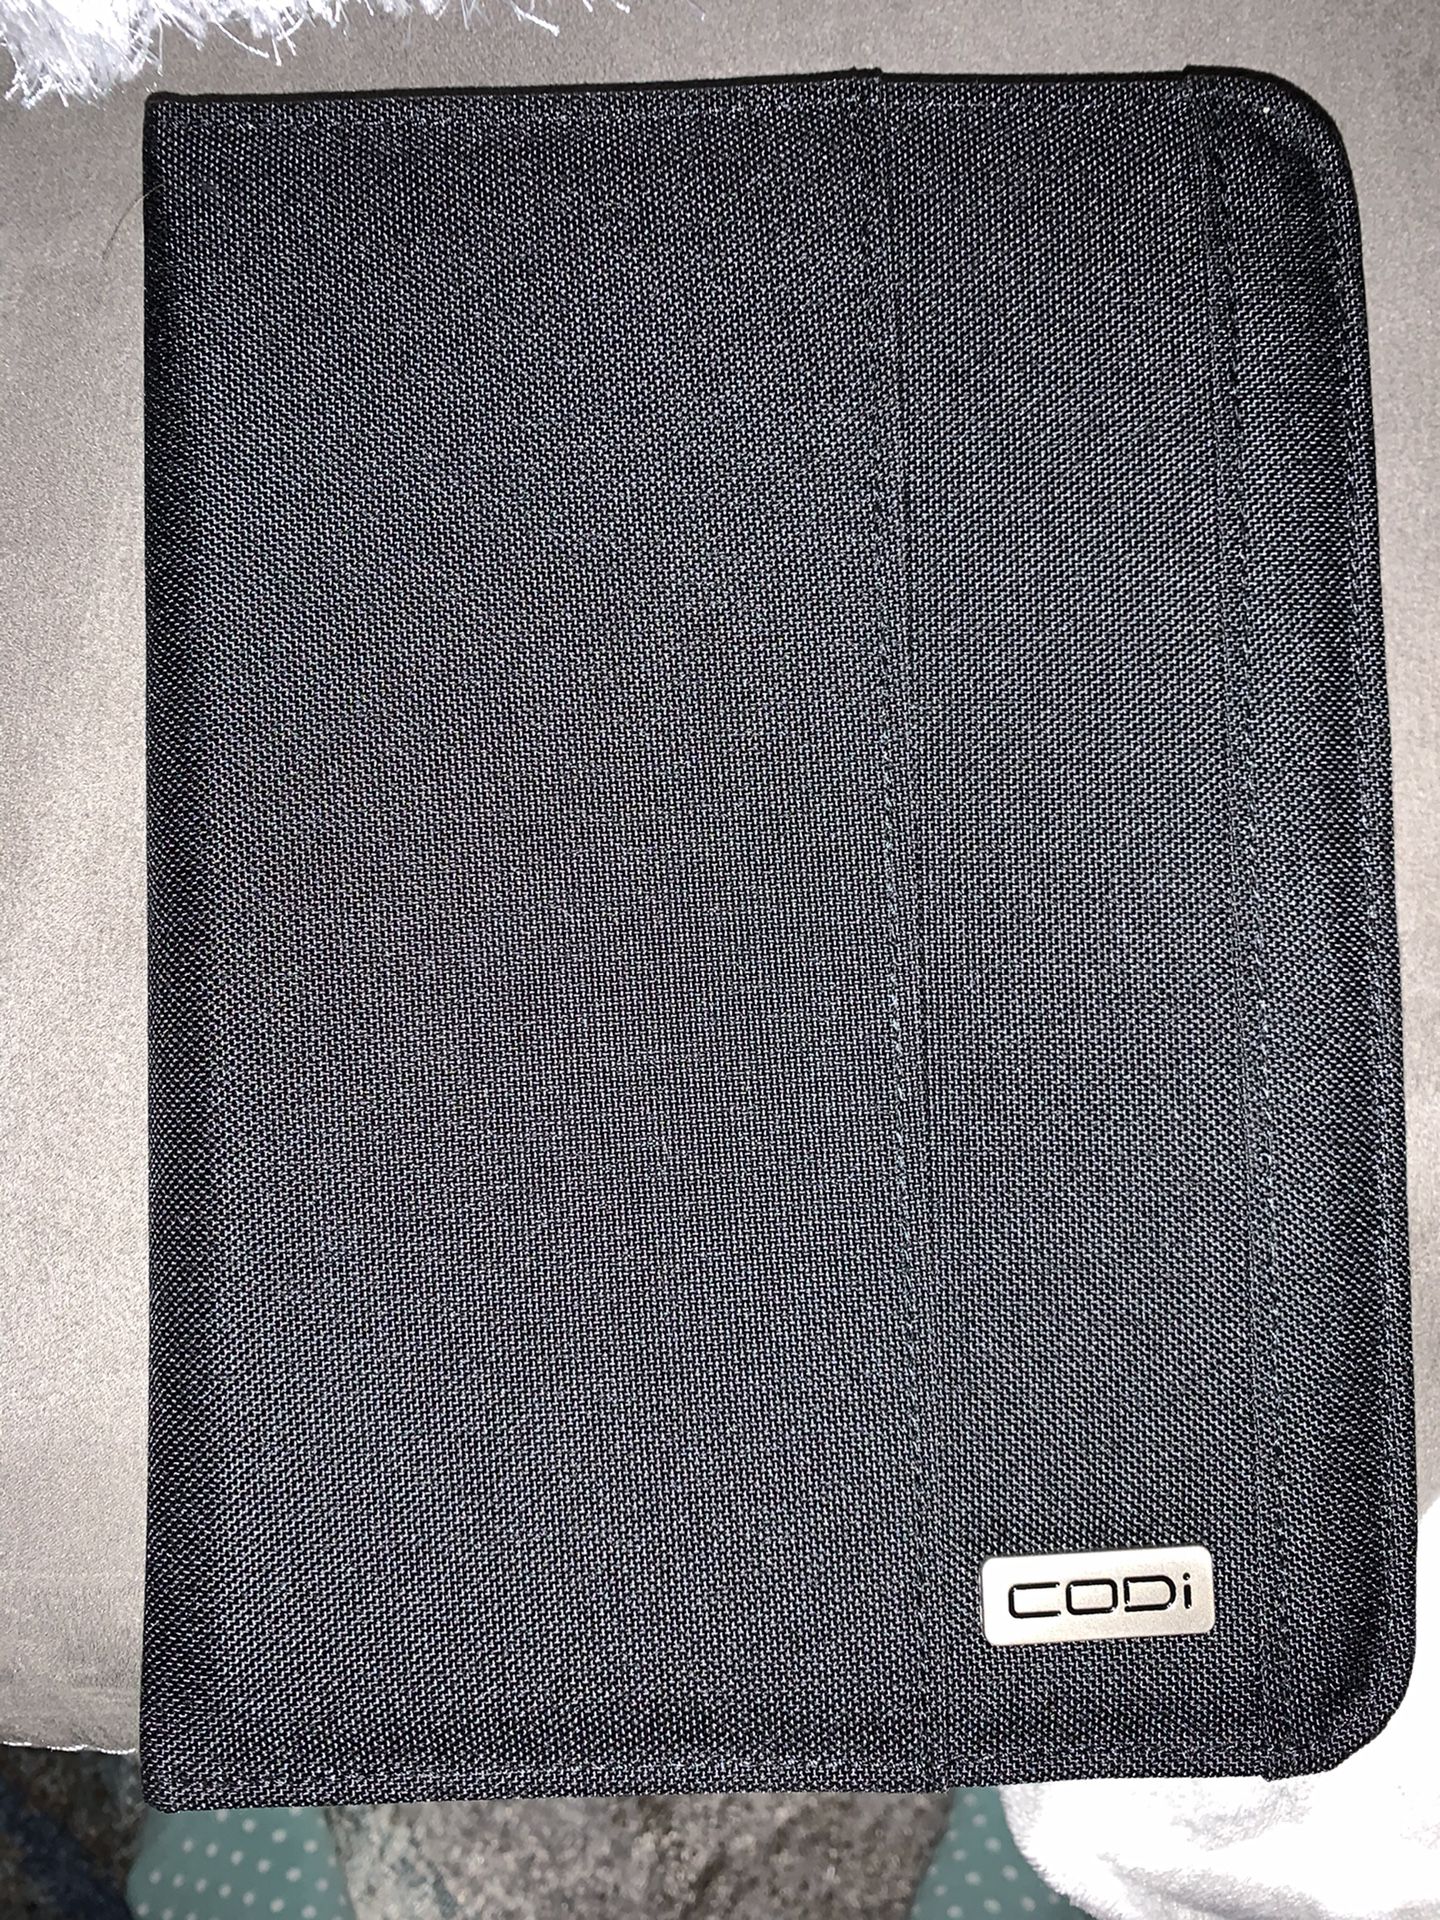 Codi 9.7” IPad carrying case , Black